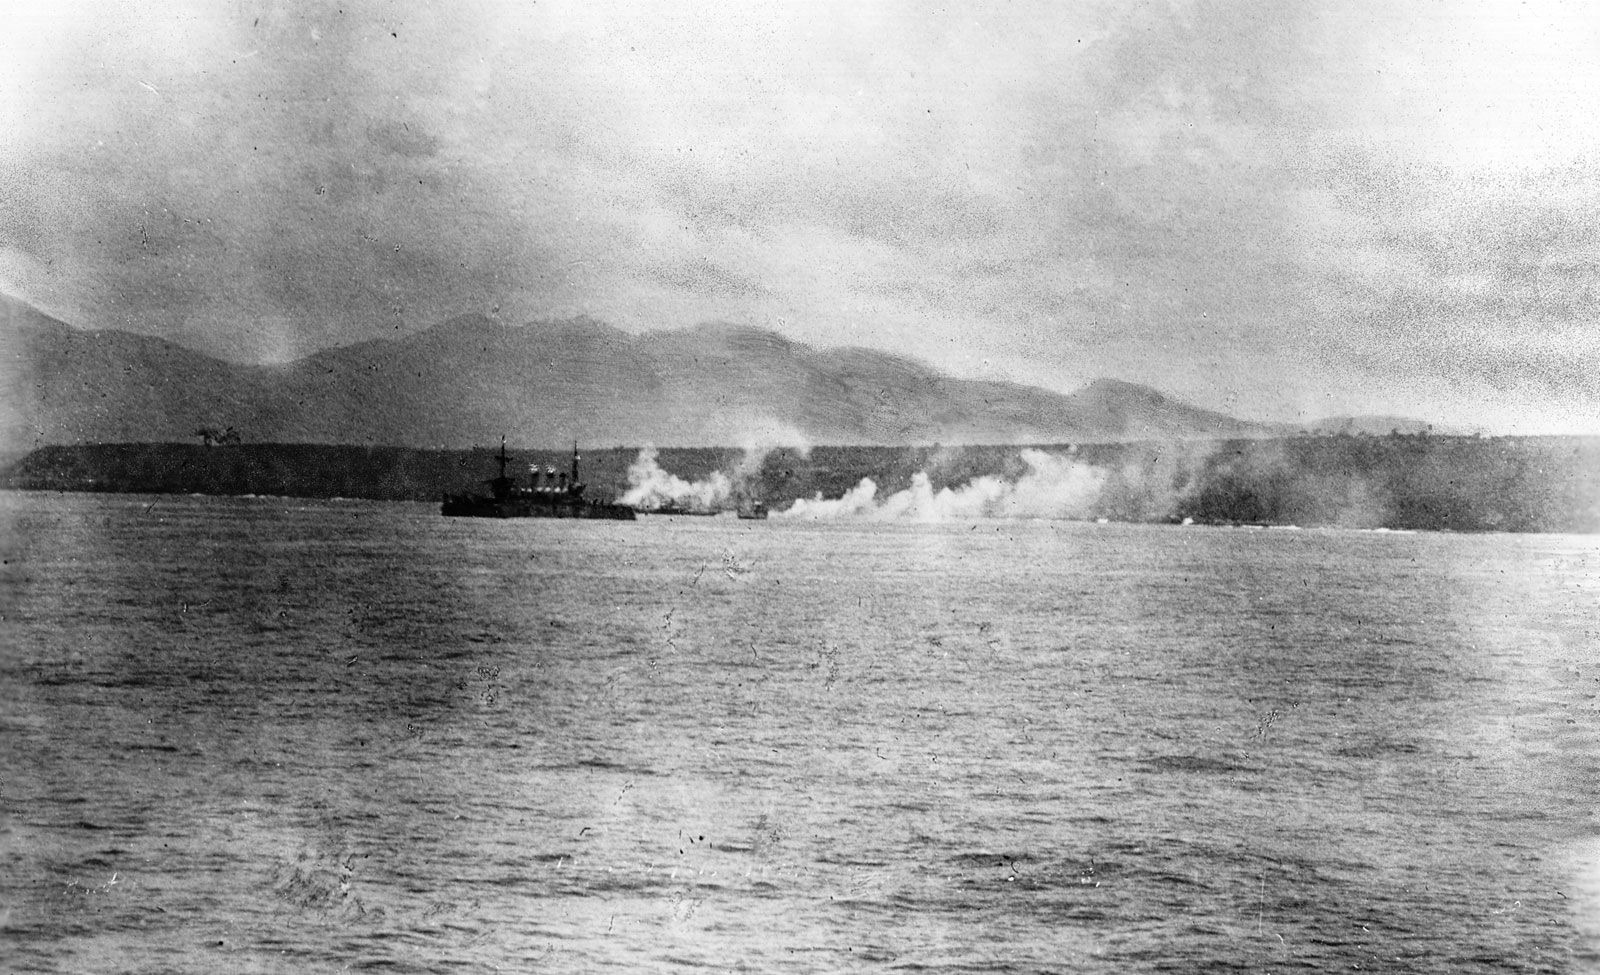 who blew up the u s battleship maine in havana in 1898